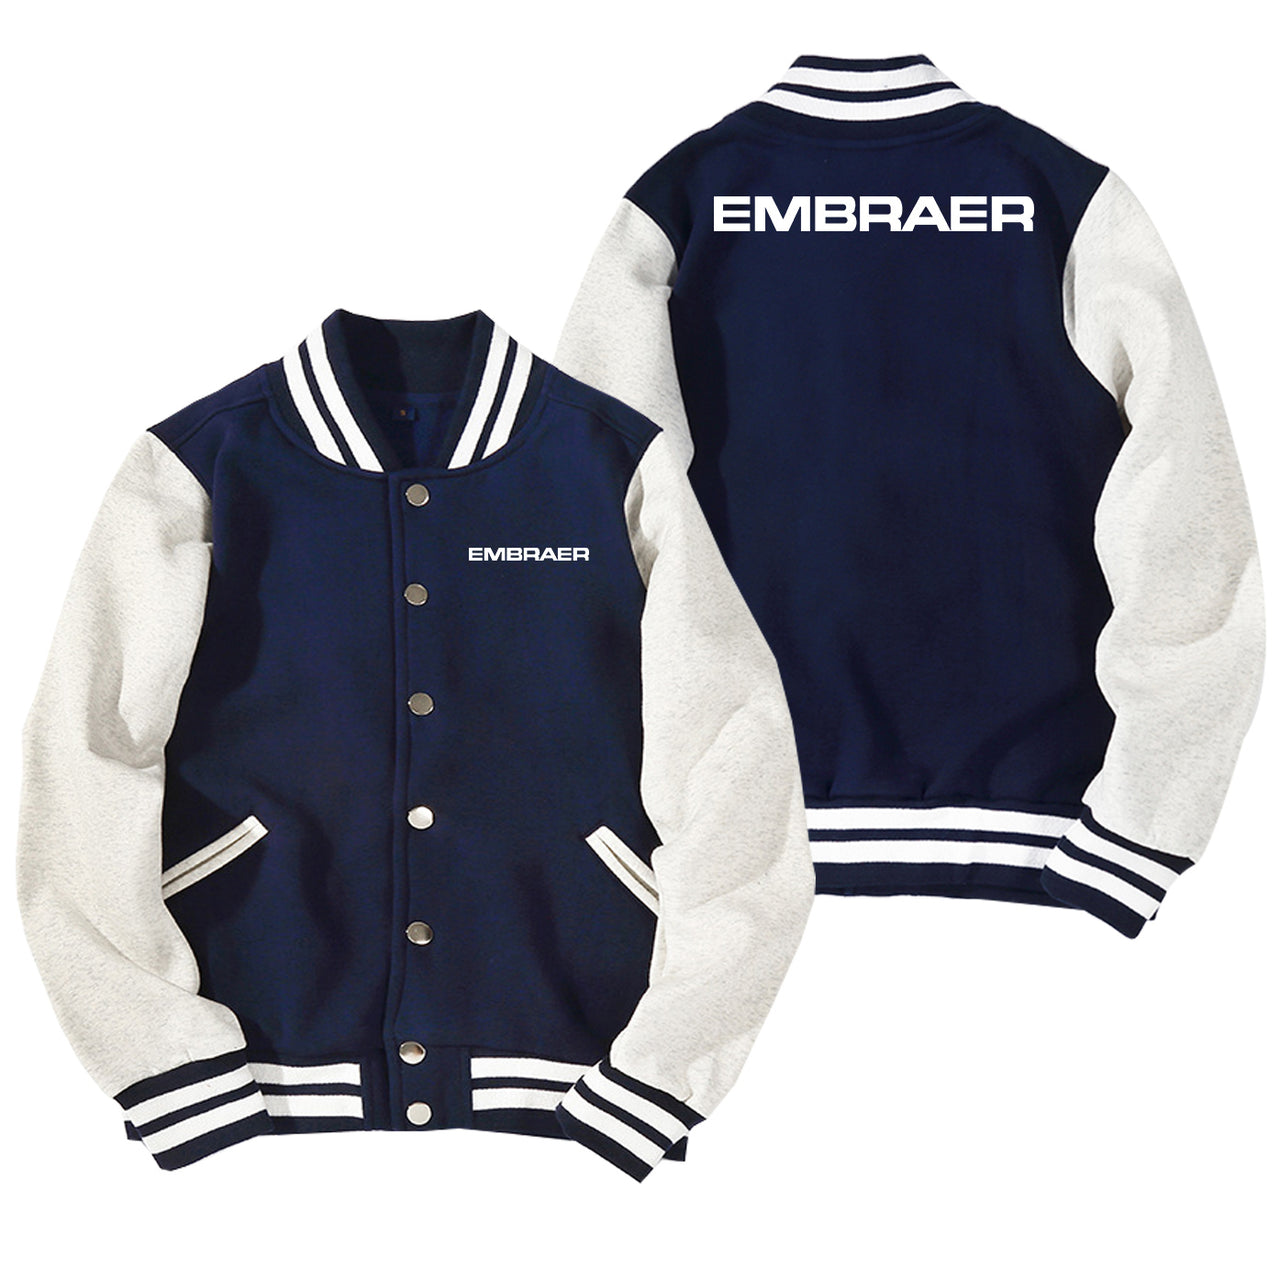 Embraer & Text Designed Baseball Style Jackets